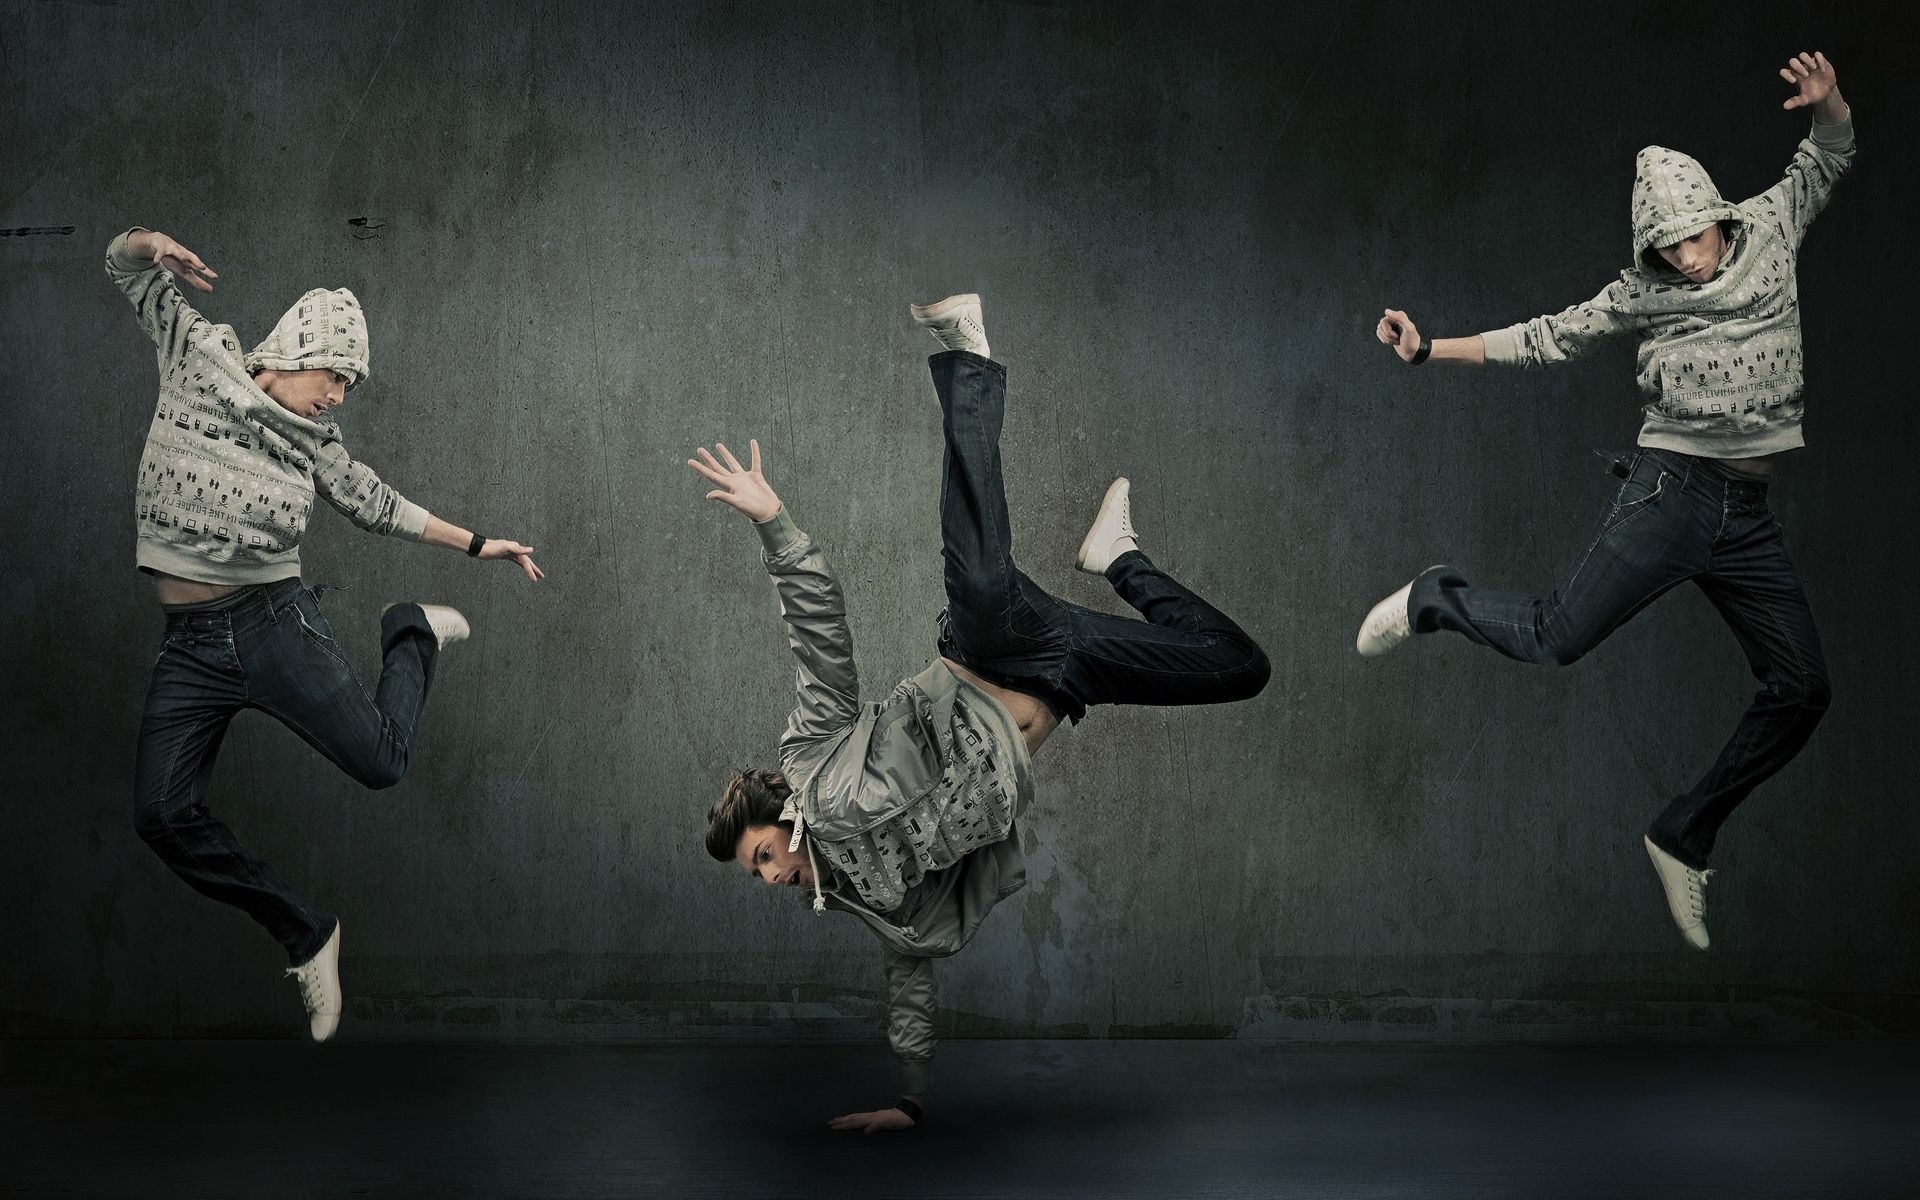 Breakdancing: Battle of The Year competition, Street dance, B-boying, Breakdance posing. 1920x1200 HD Wallpaper.